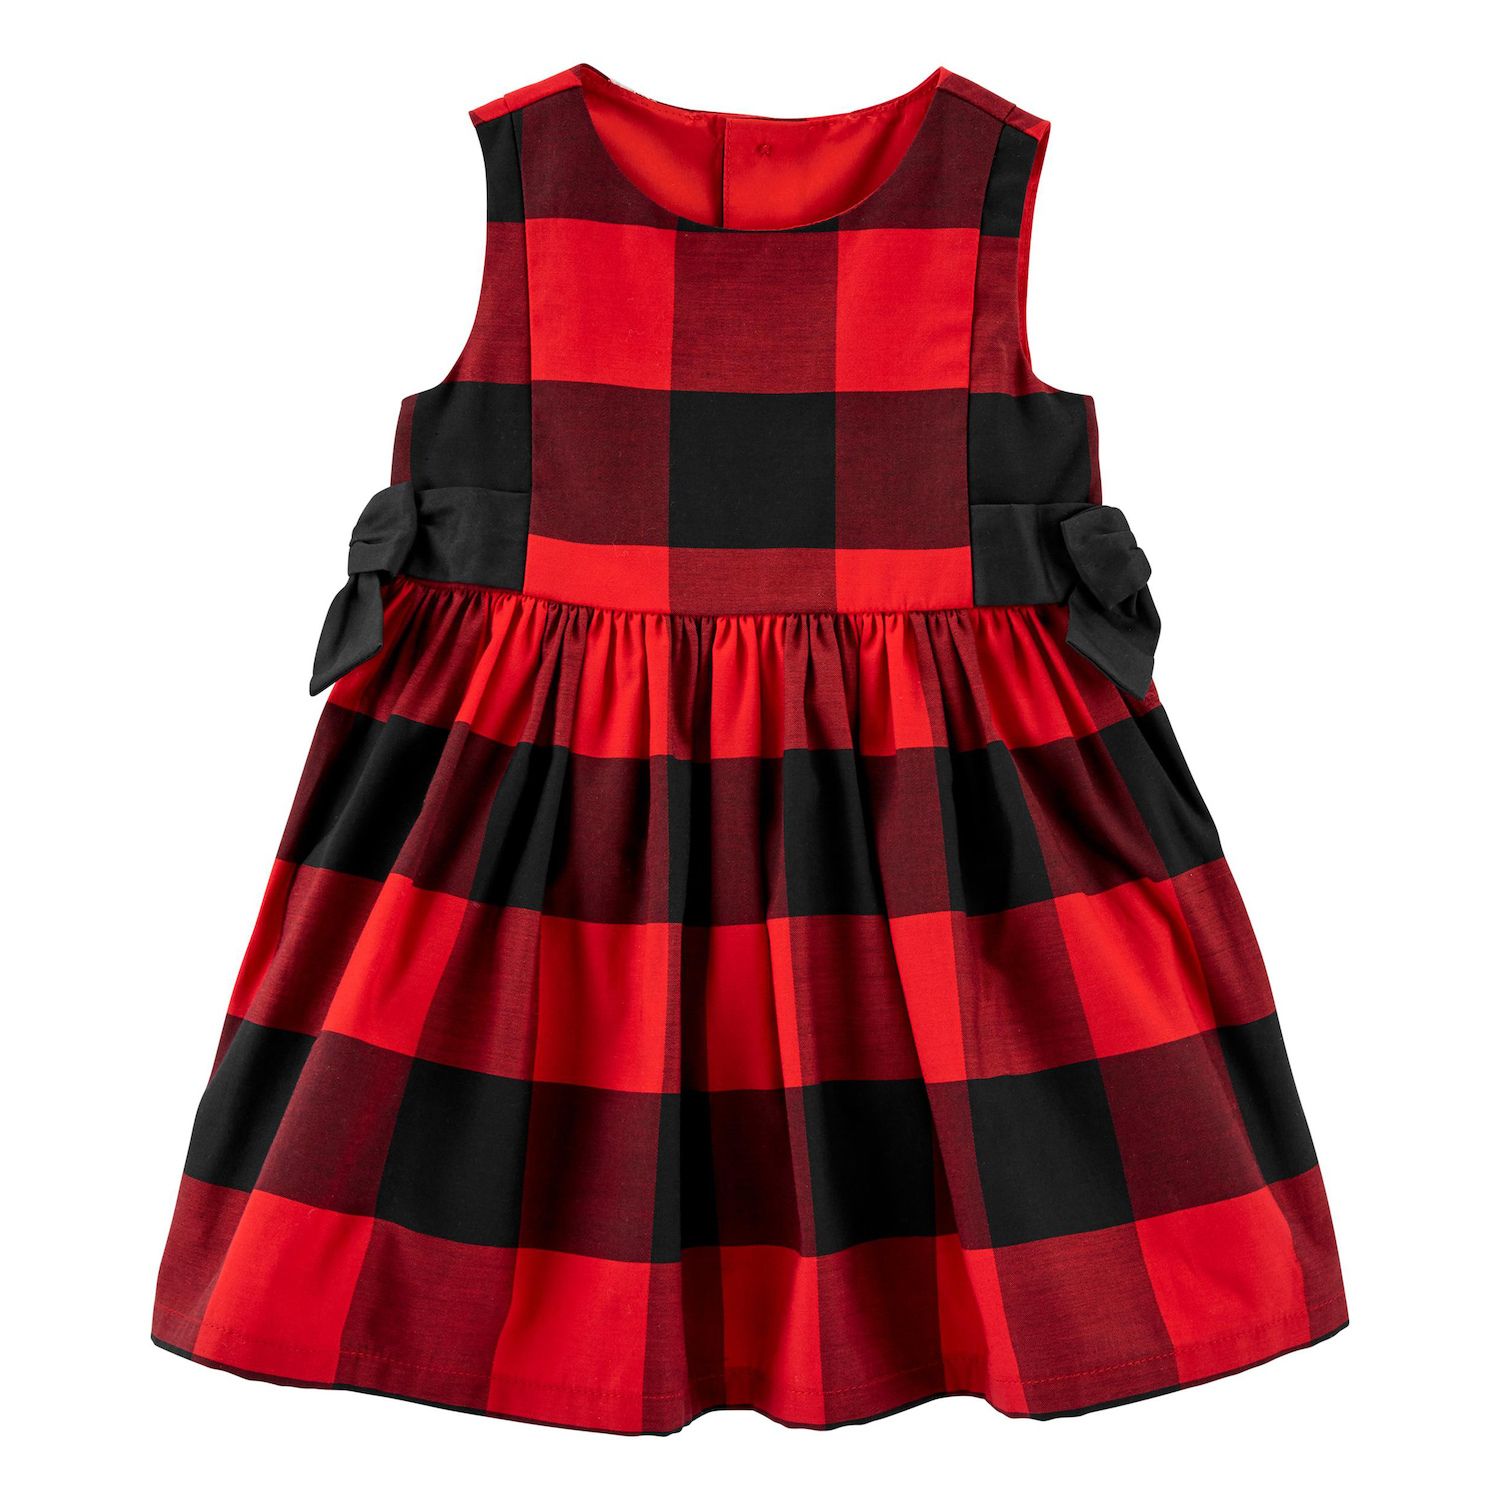 buy baby girl dress online